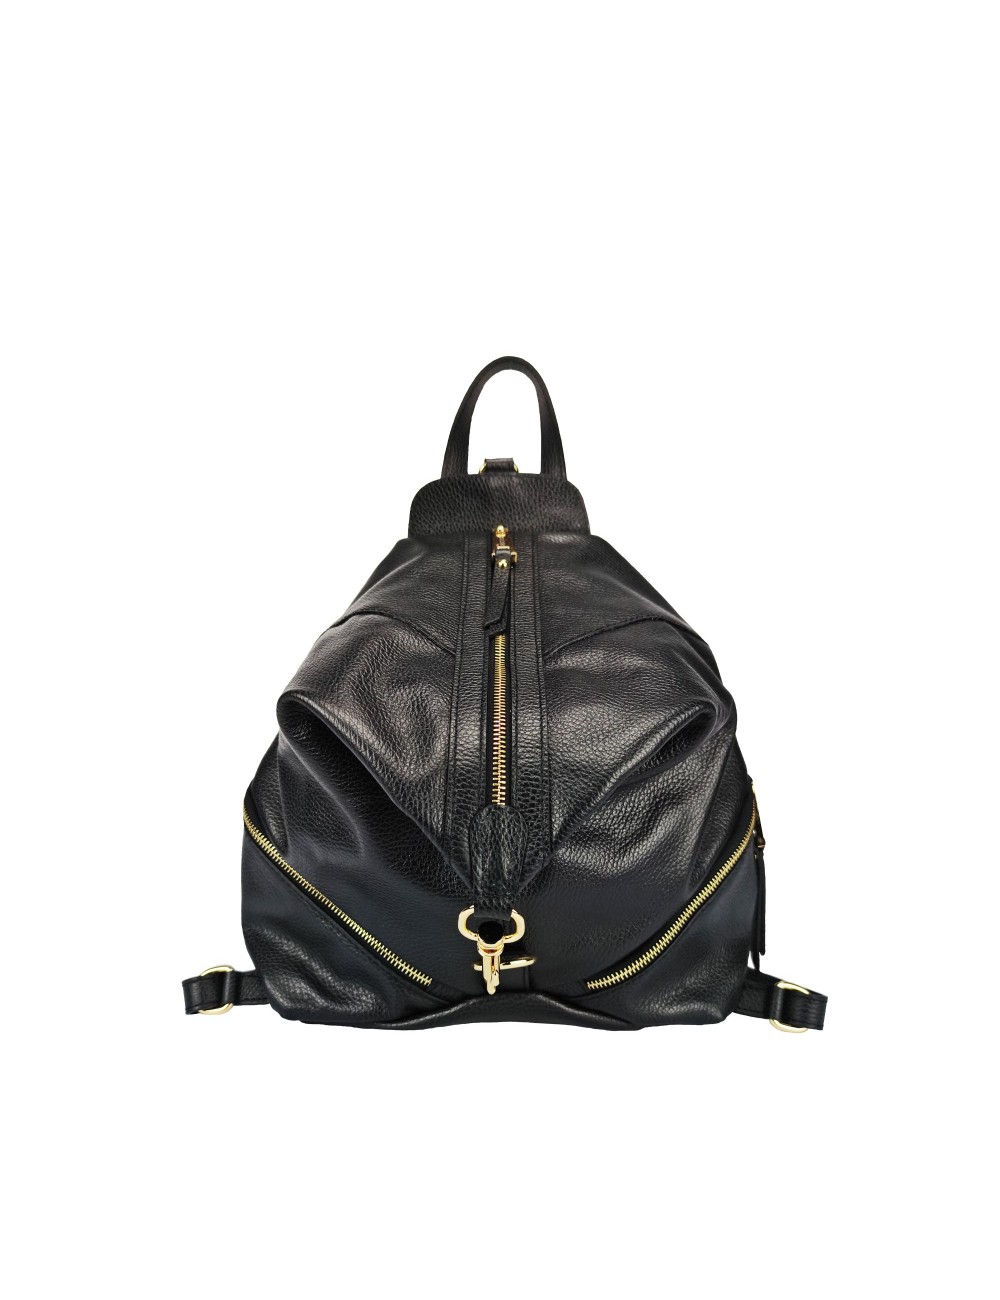 copy of Shoulder Backpack in Natural Tanned Leather - Black